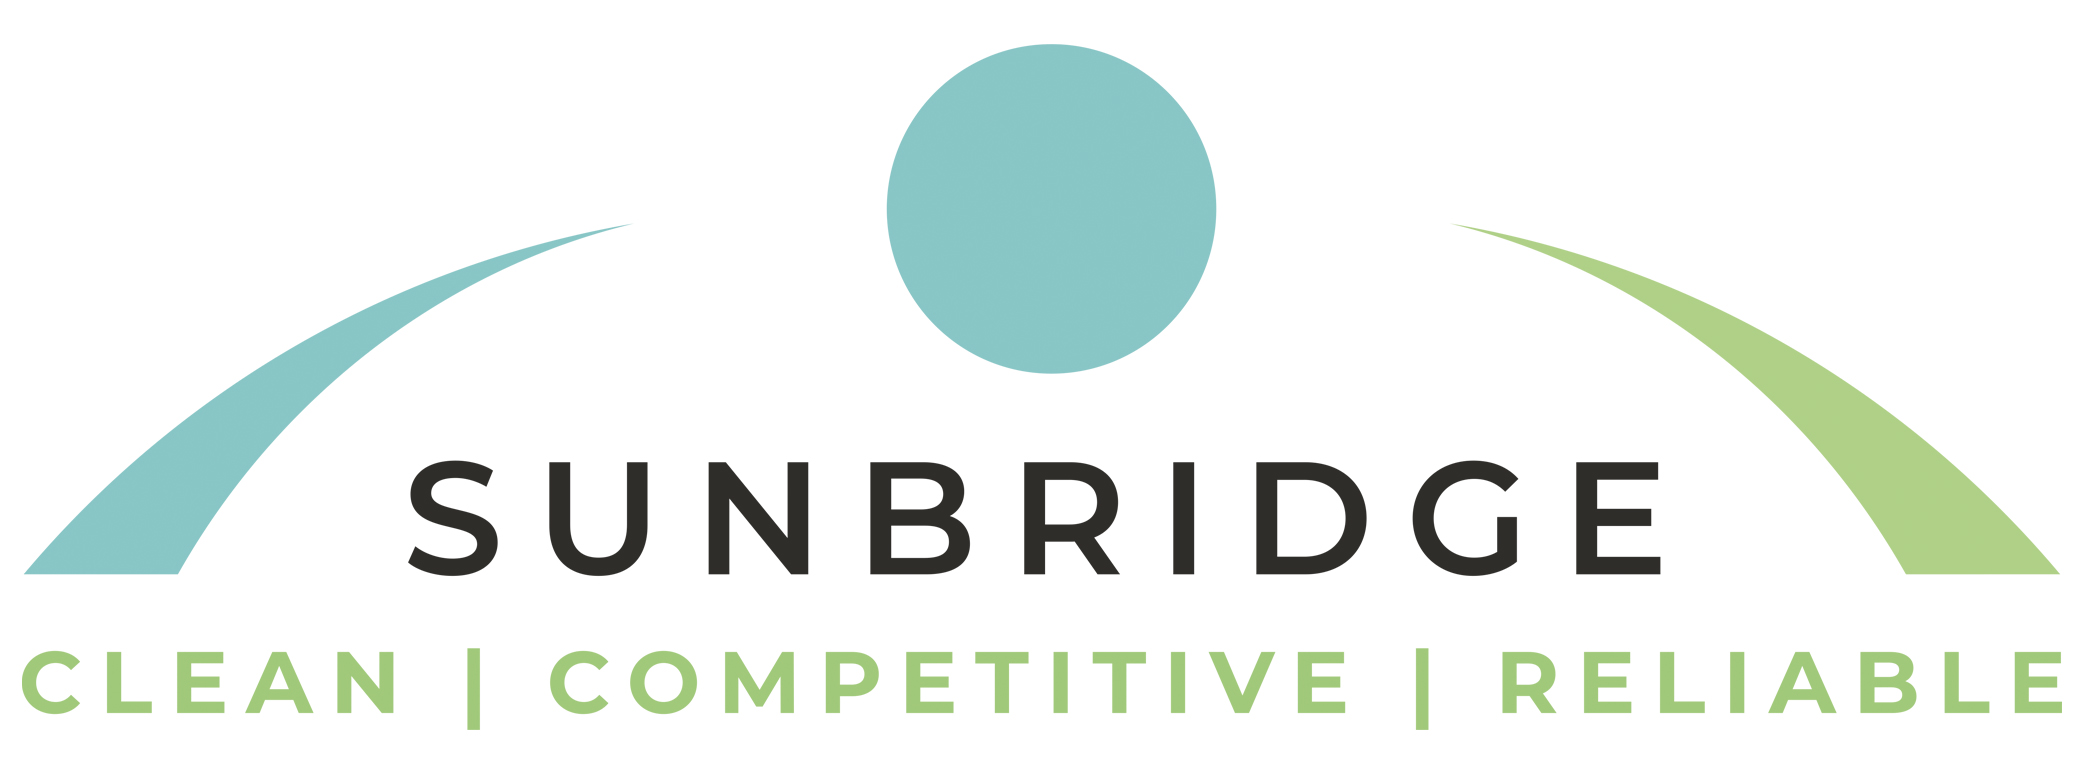 Sunbridge energy services logo